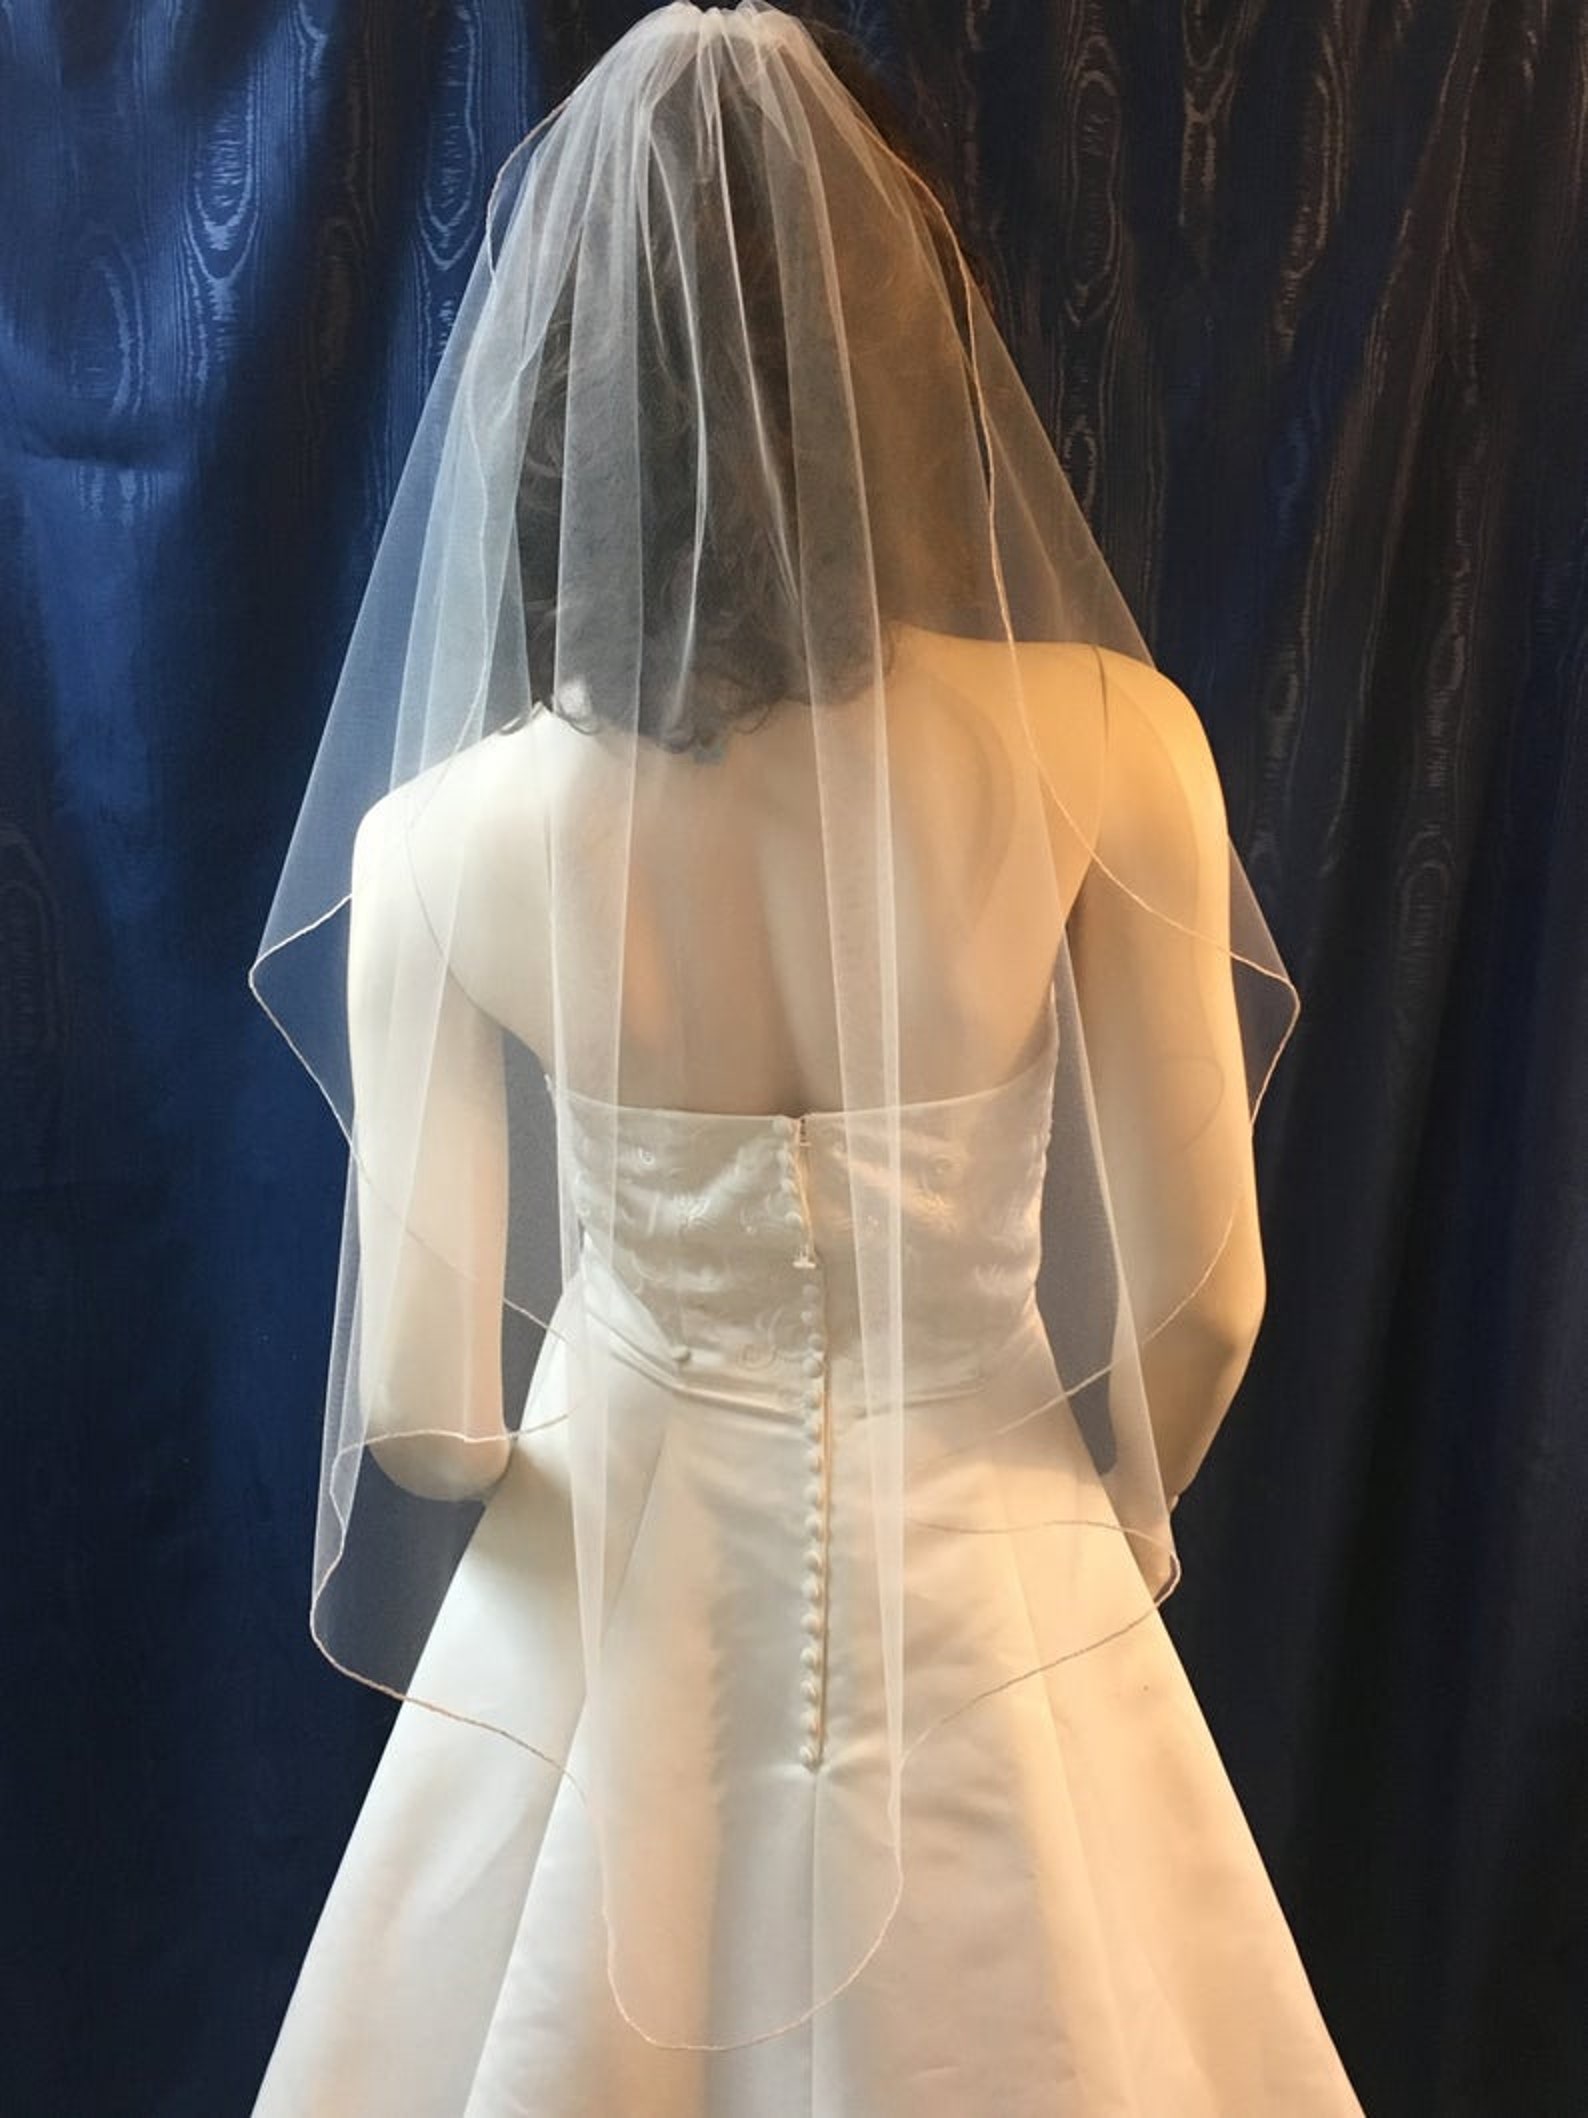 Angel Cut Bridal Veil Wedding Veils Available in 8 Lengths | Etsy